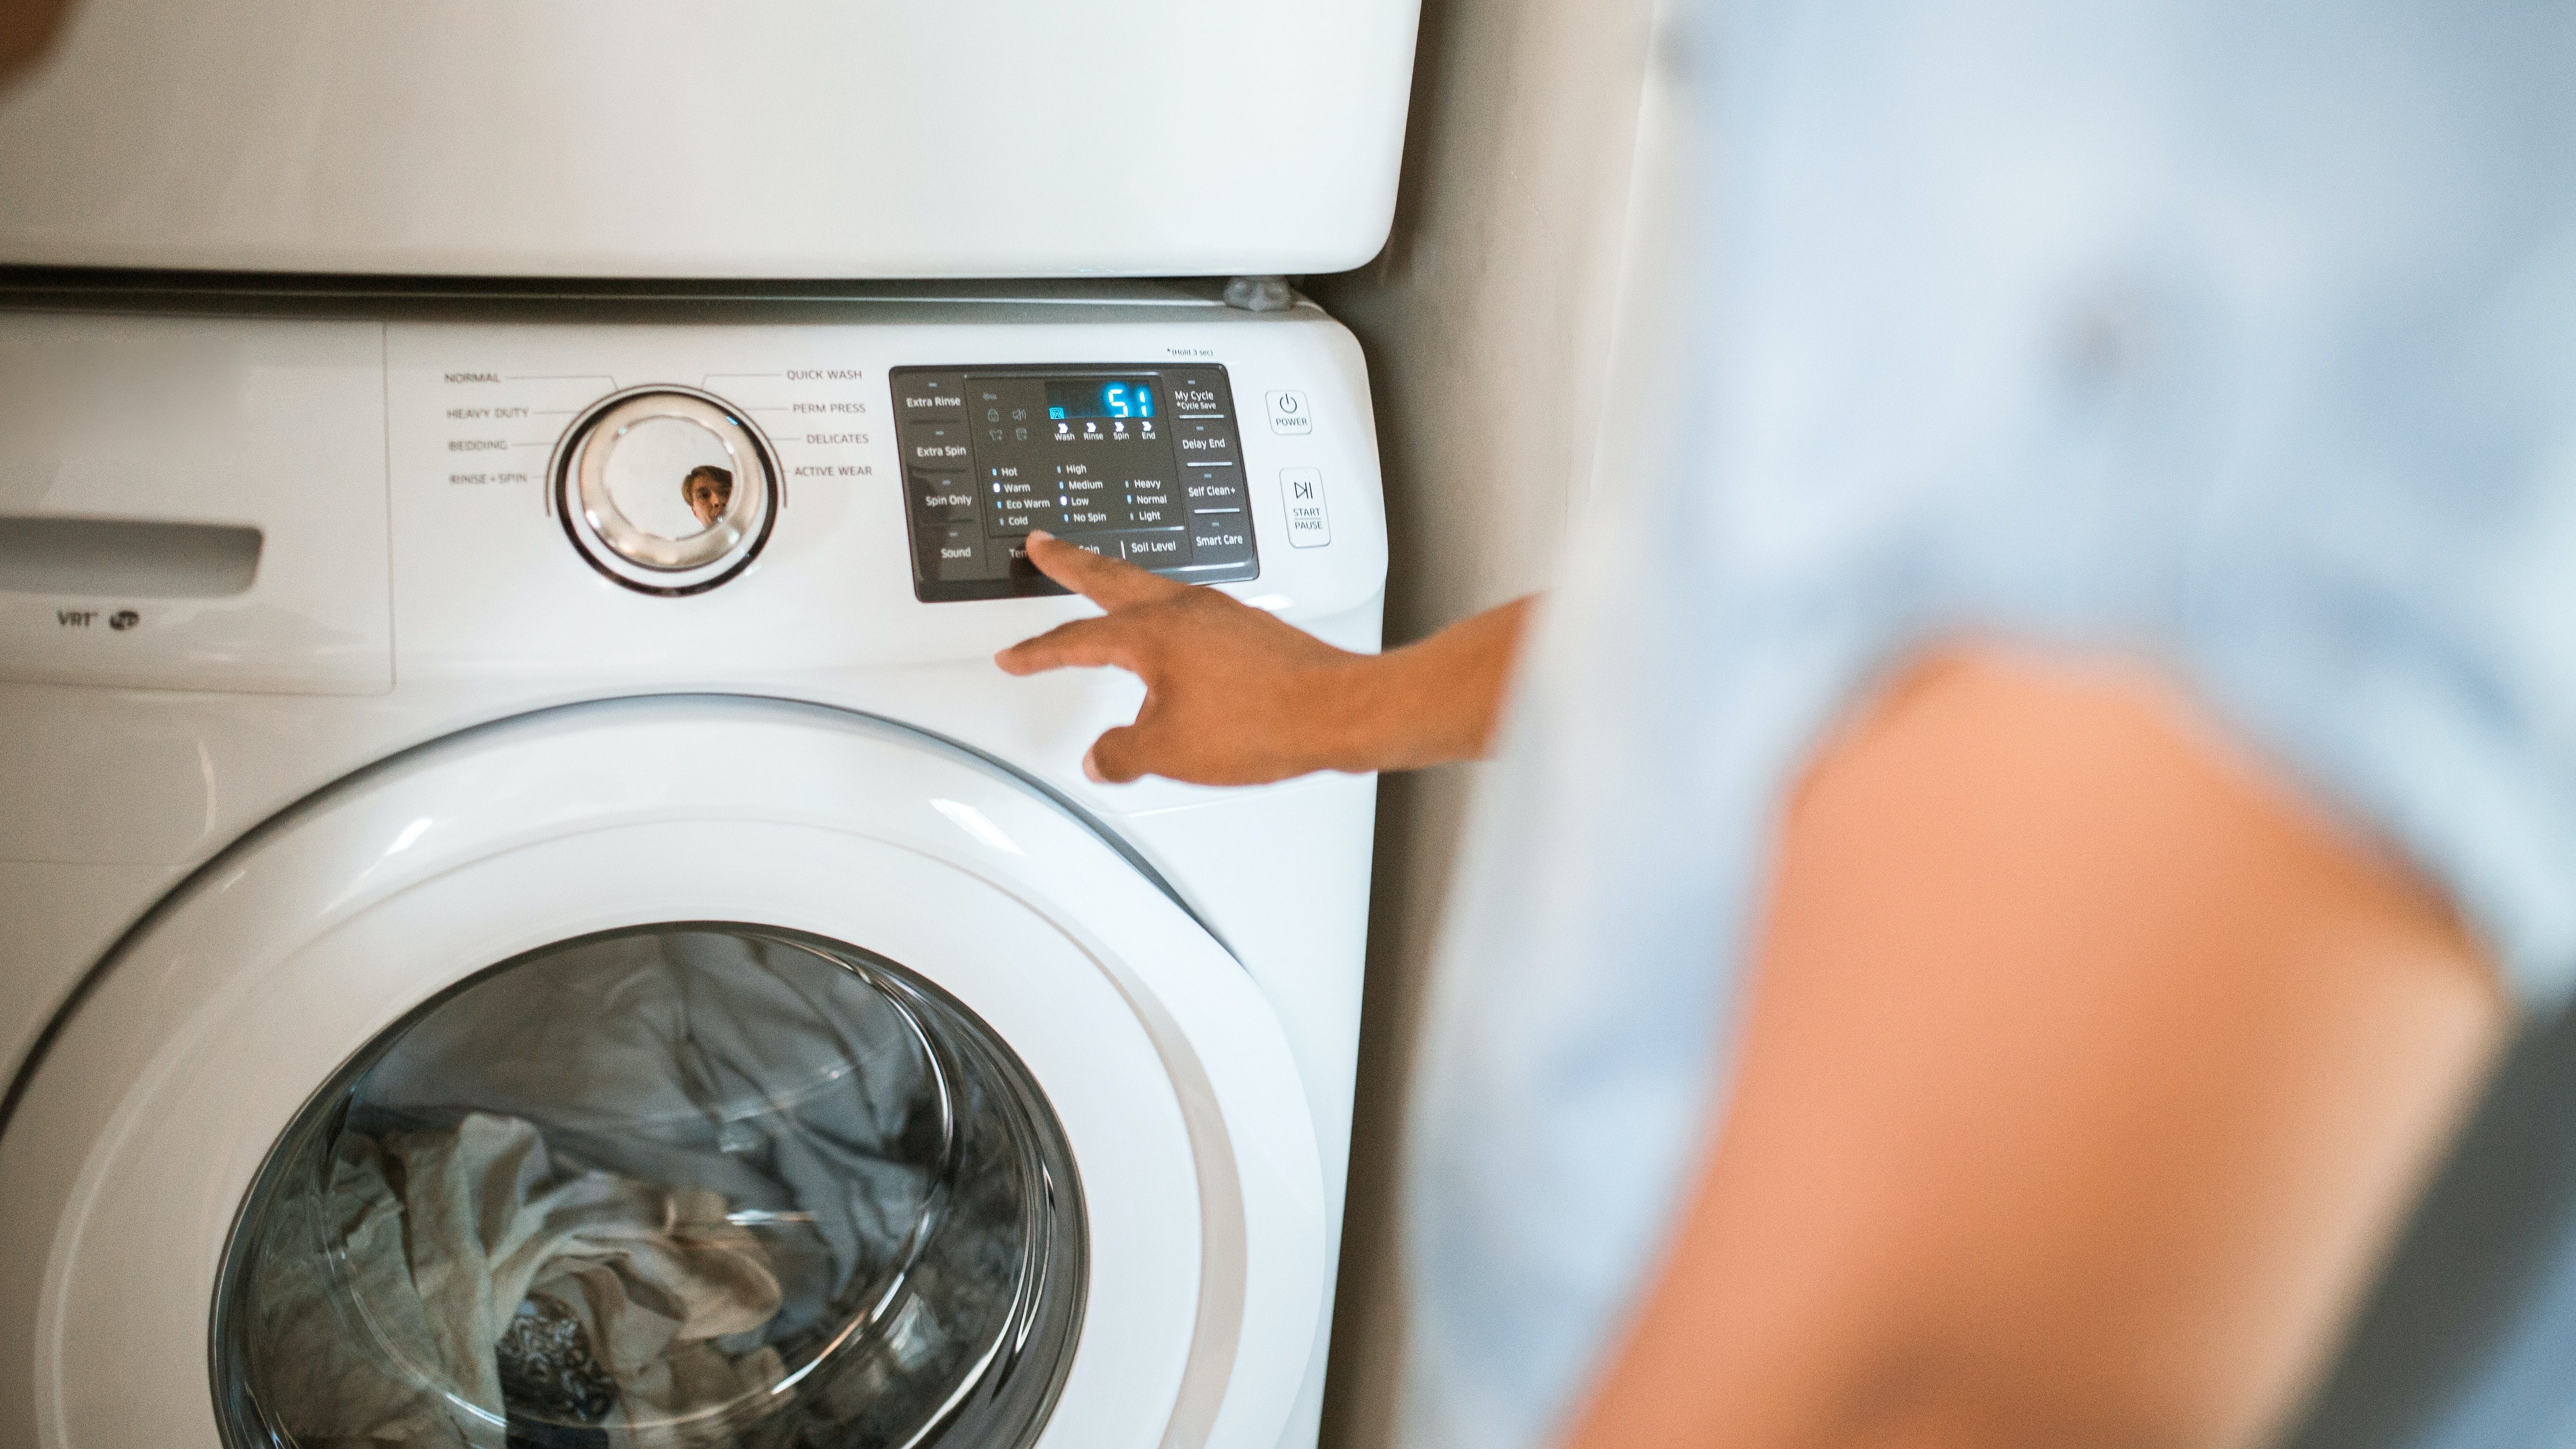 Problema con tubo de desague de la lavadora (TEMA SERIO) - Forocoches